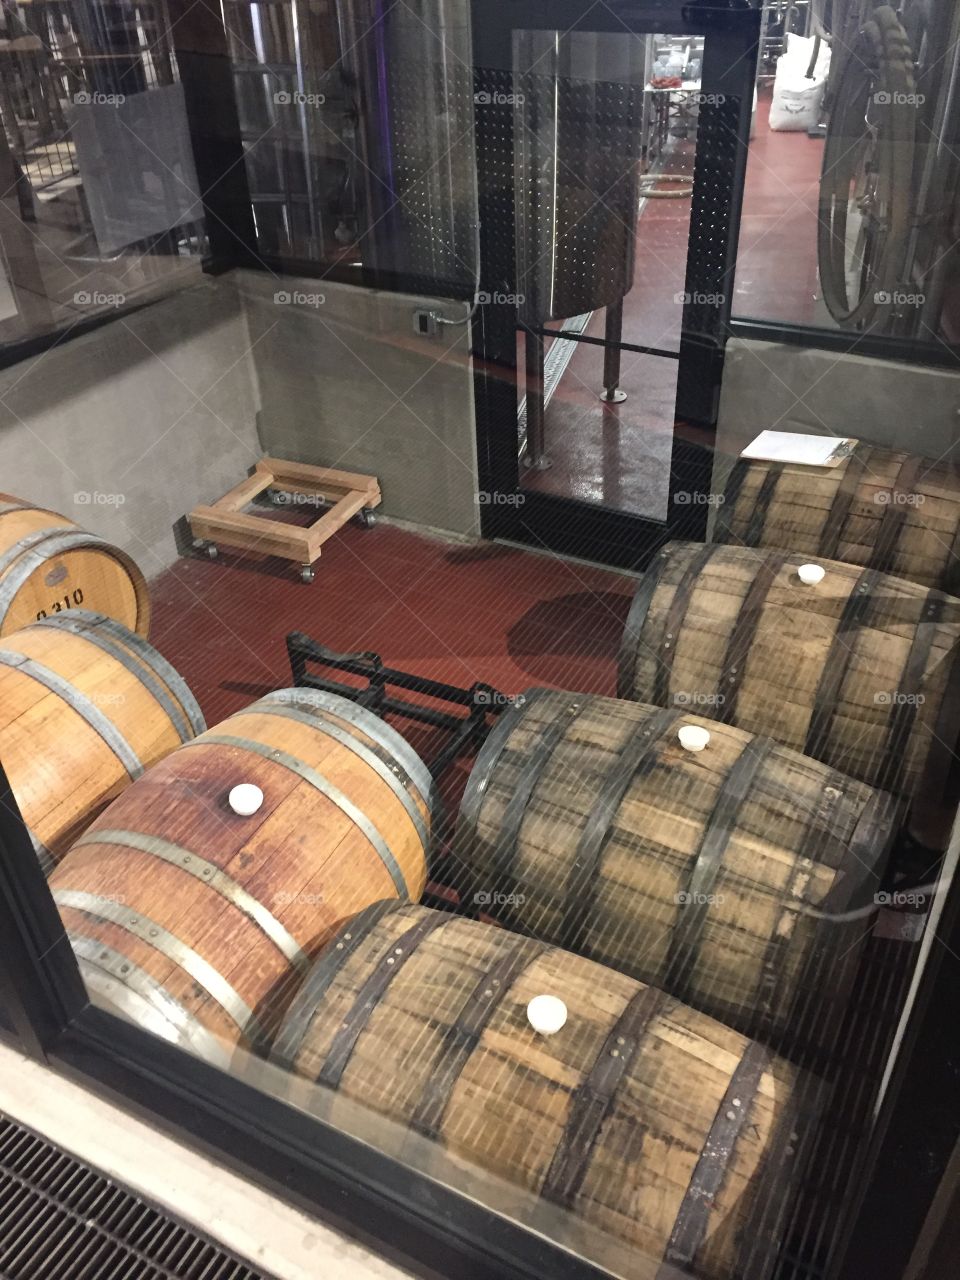 10 Barrel Brewing in Denver,CO 